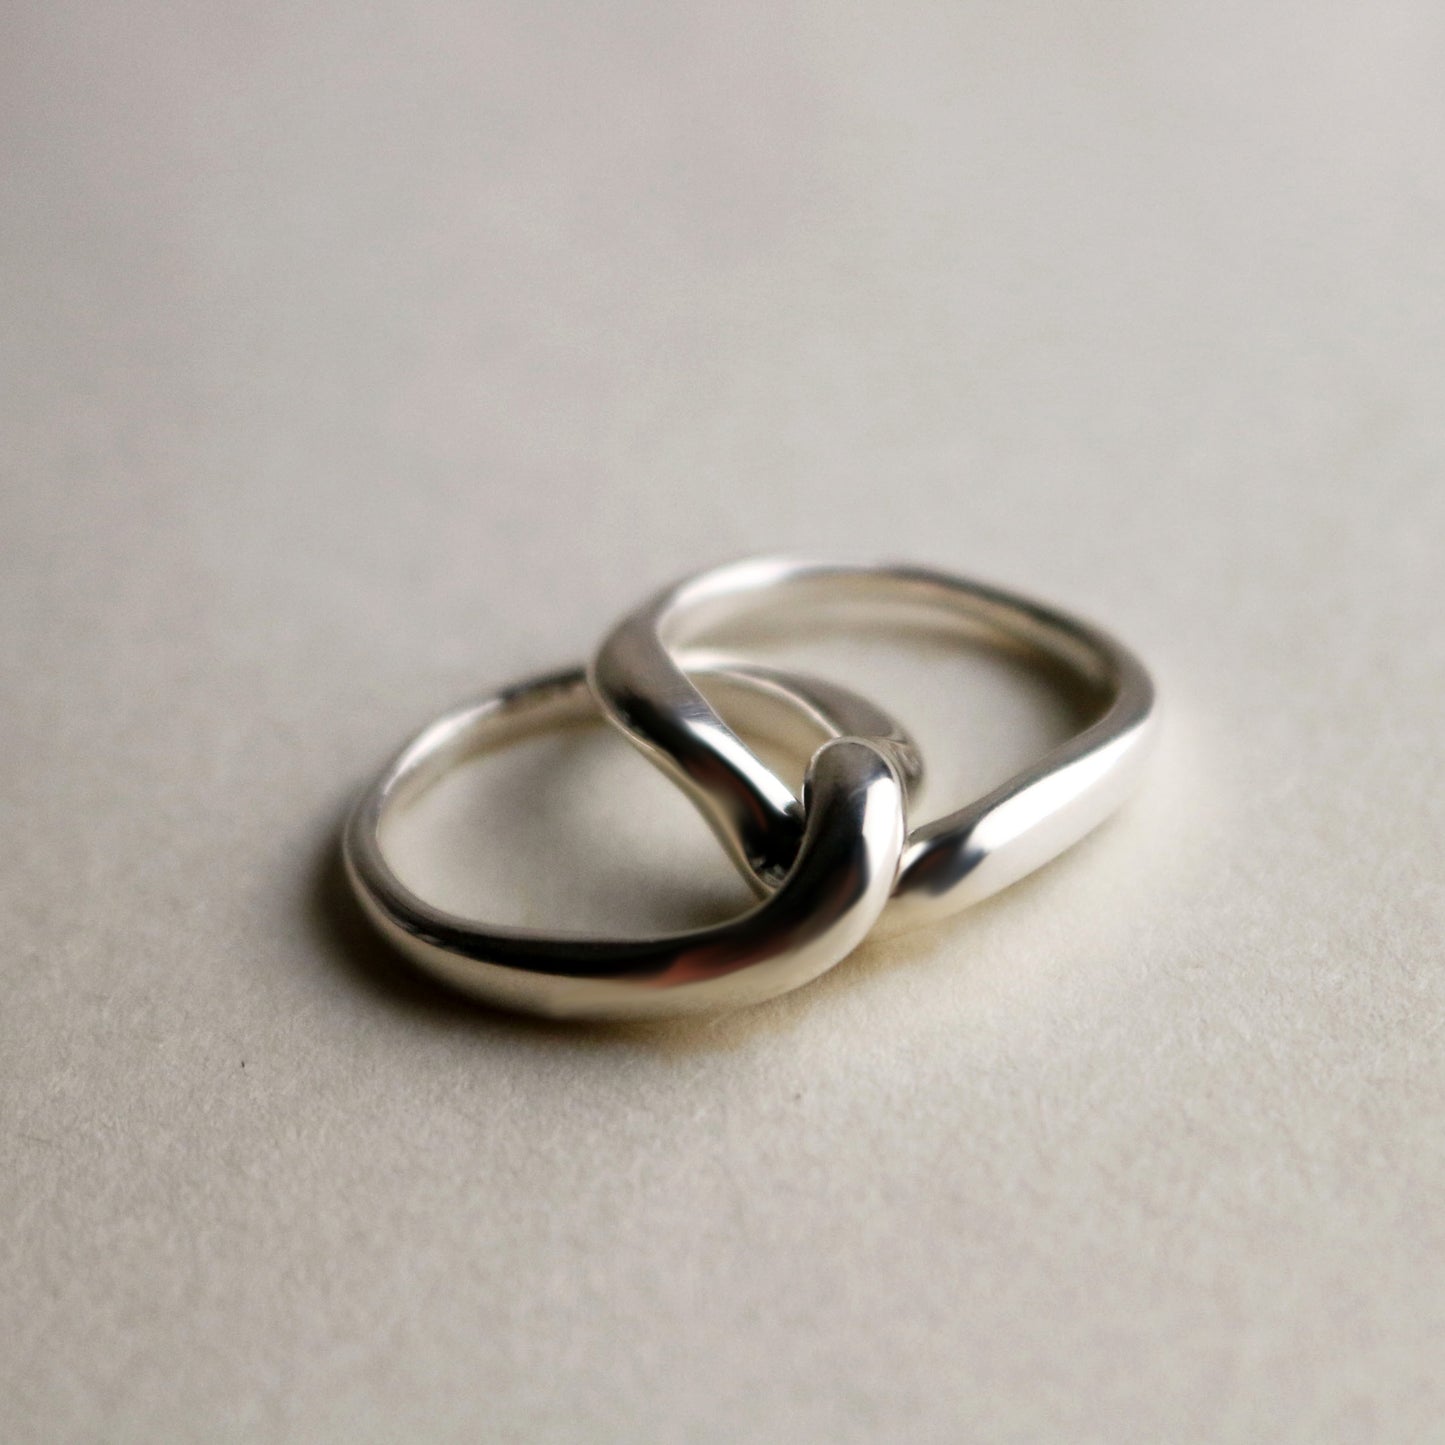 Silver 925 2 rings